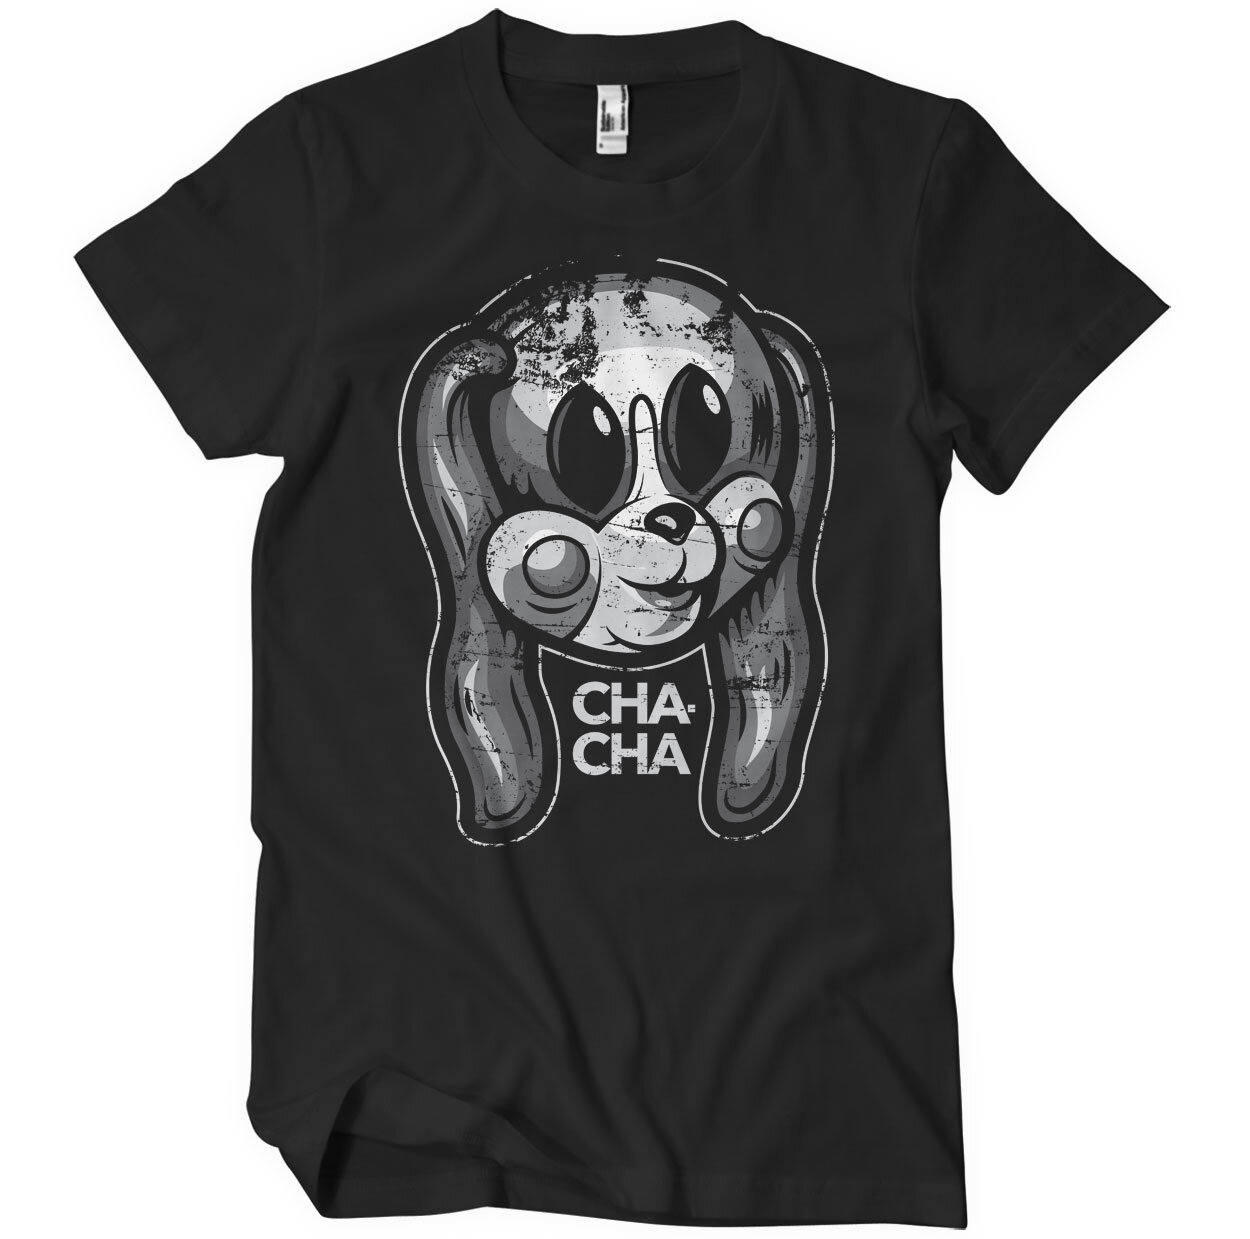 Umbrella Academy - Cha-Cha T-Shirt